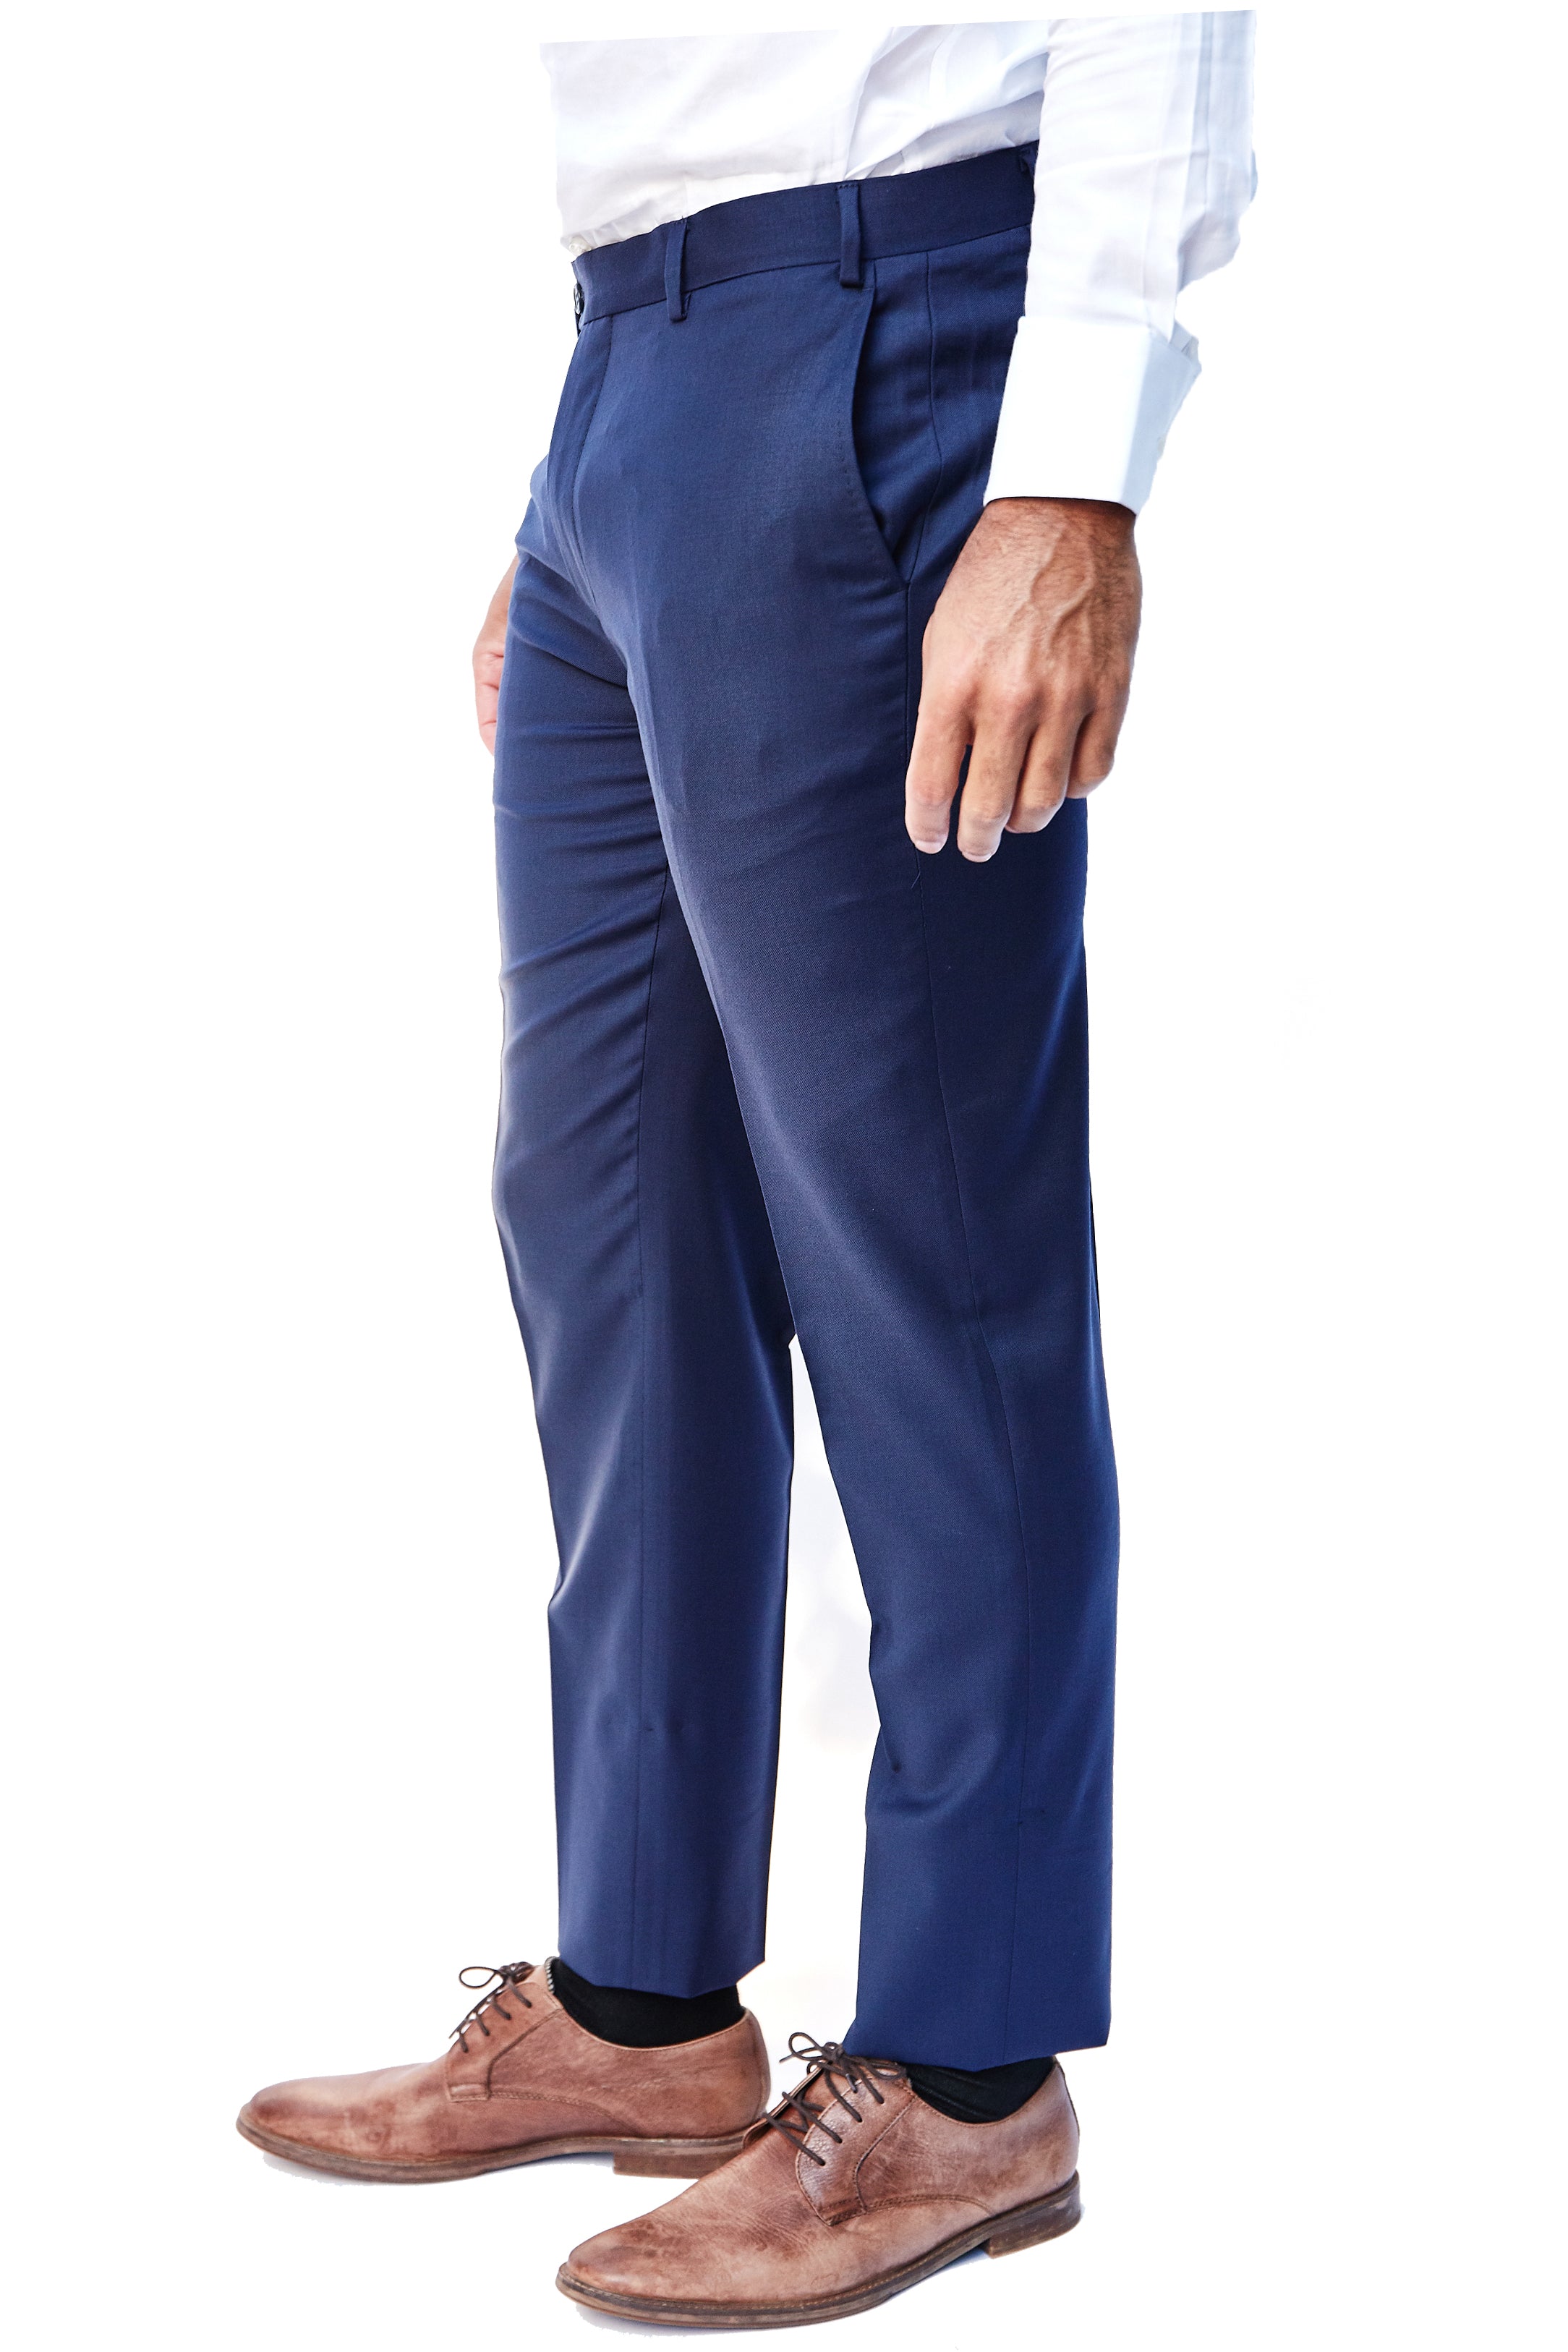 Cotton Slim Fit Men Dark Blue Formal Trouser, Machine wash, Size: 28-40 at  Rs 350 in Mumbai